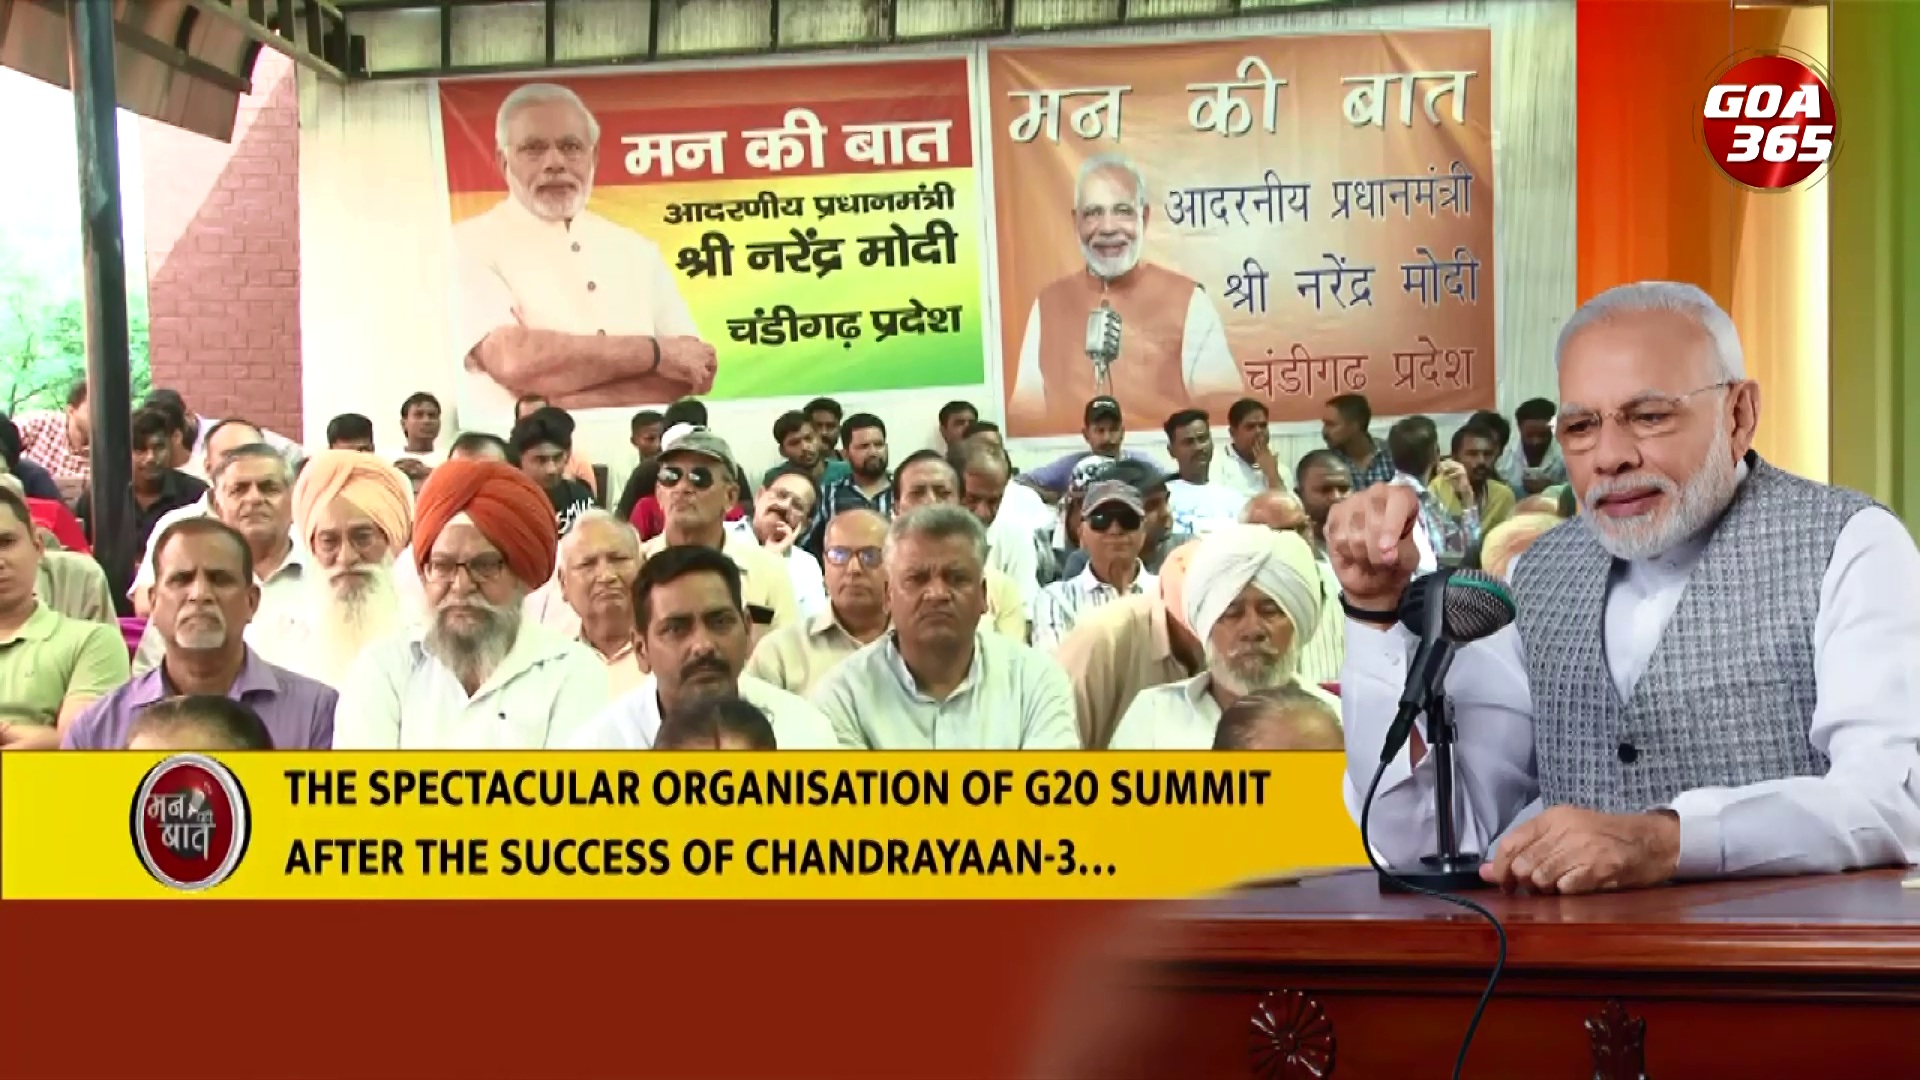 PM Modi addresses 105th episode of Mann ki baat, highlights India’s successful G20 presidency||ENGLISH||GOA365